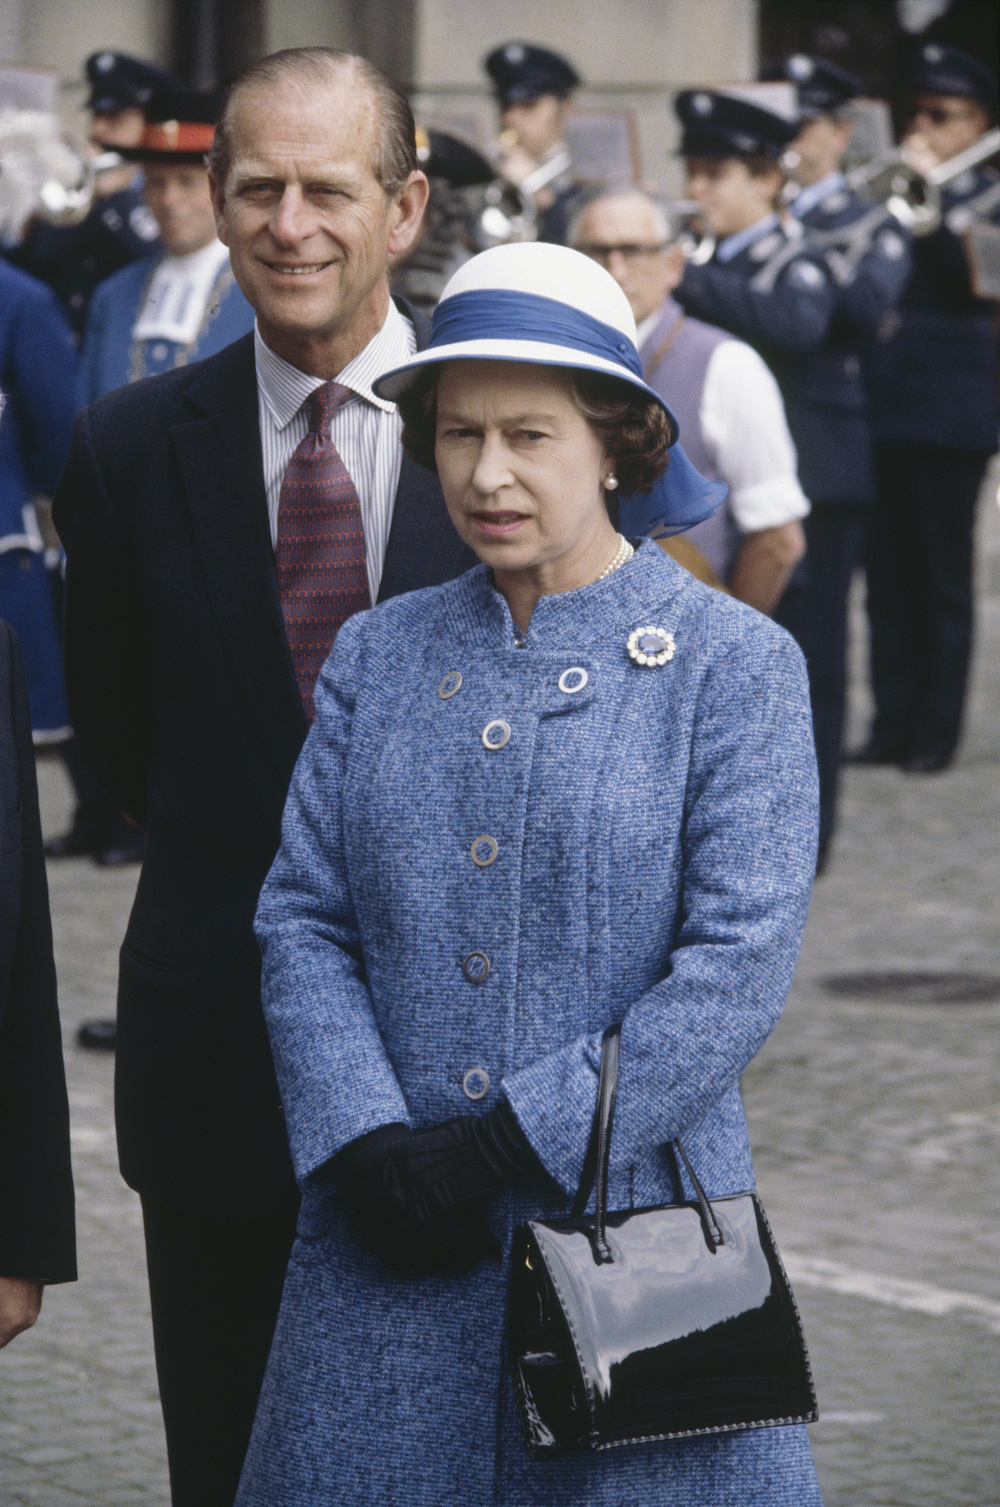 Queen Elizabeth with Prince Philip and her trusty Launer Royale bag in Zurich, Switzerland in 1980